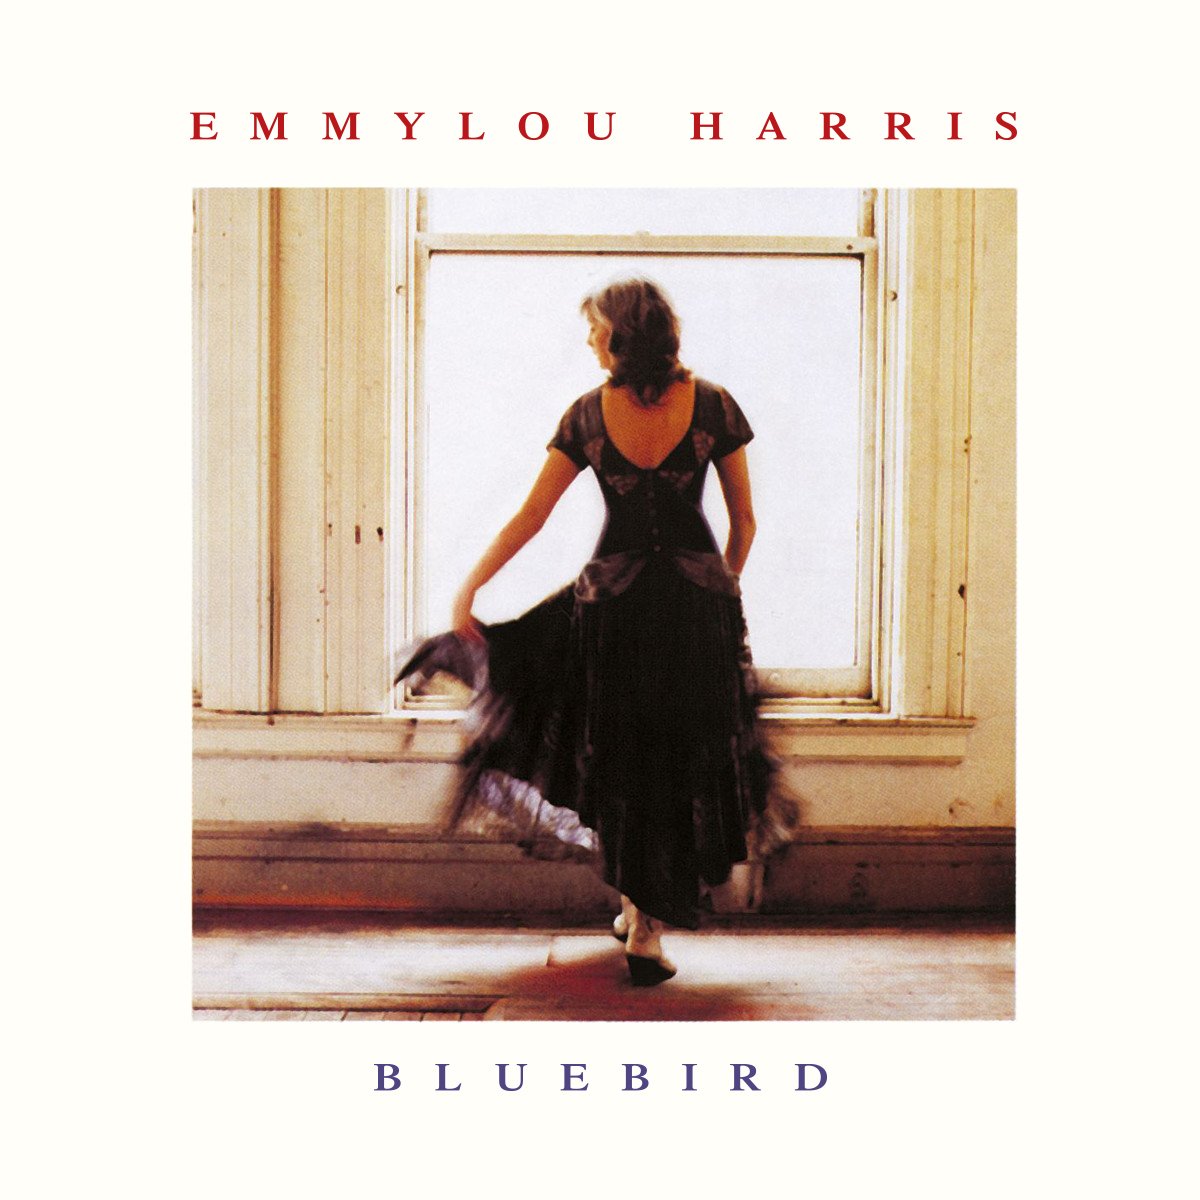 Emmylou Harris-Bluebird-CD-FLAC-1989-401